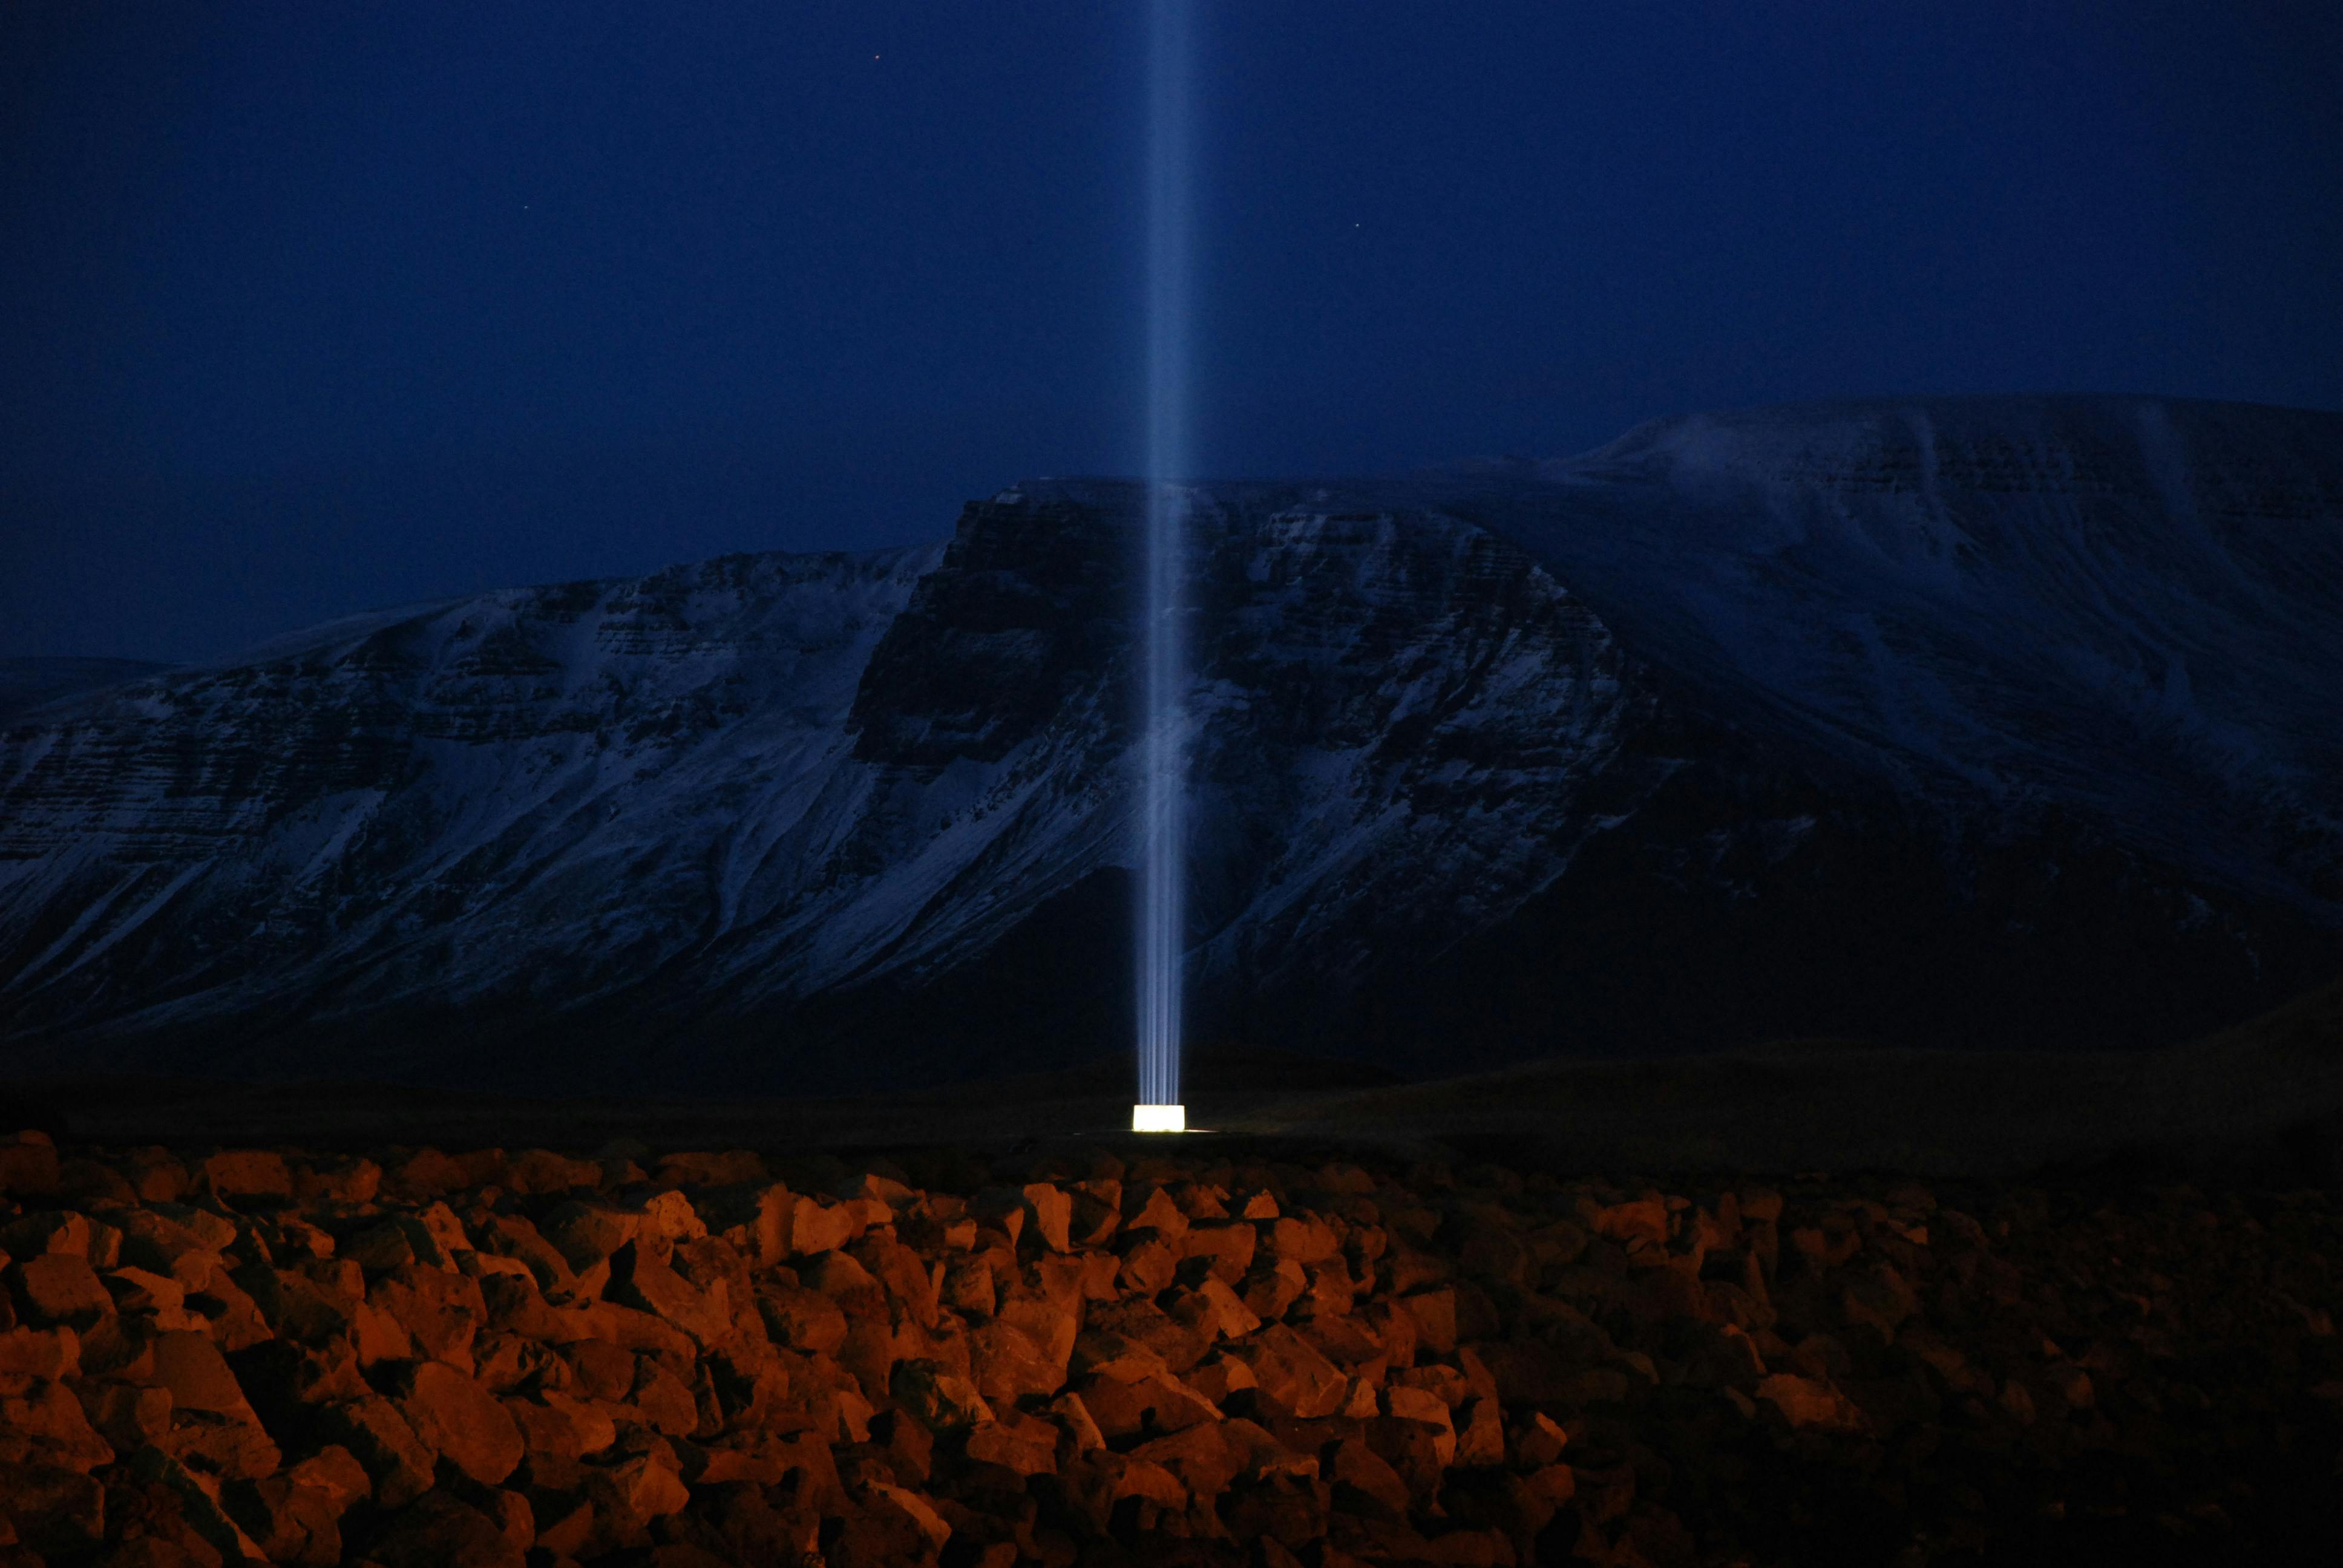 Imagine Peace Tower tour in Reykjavík